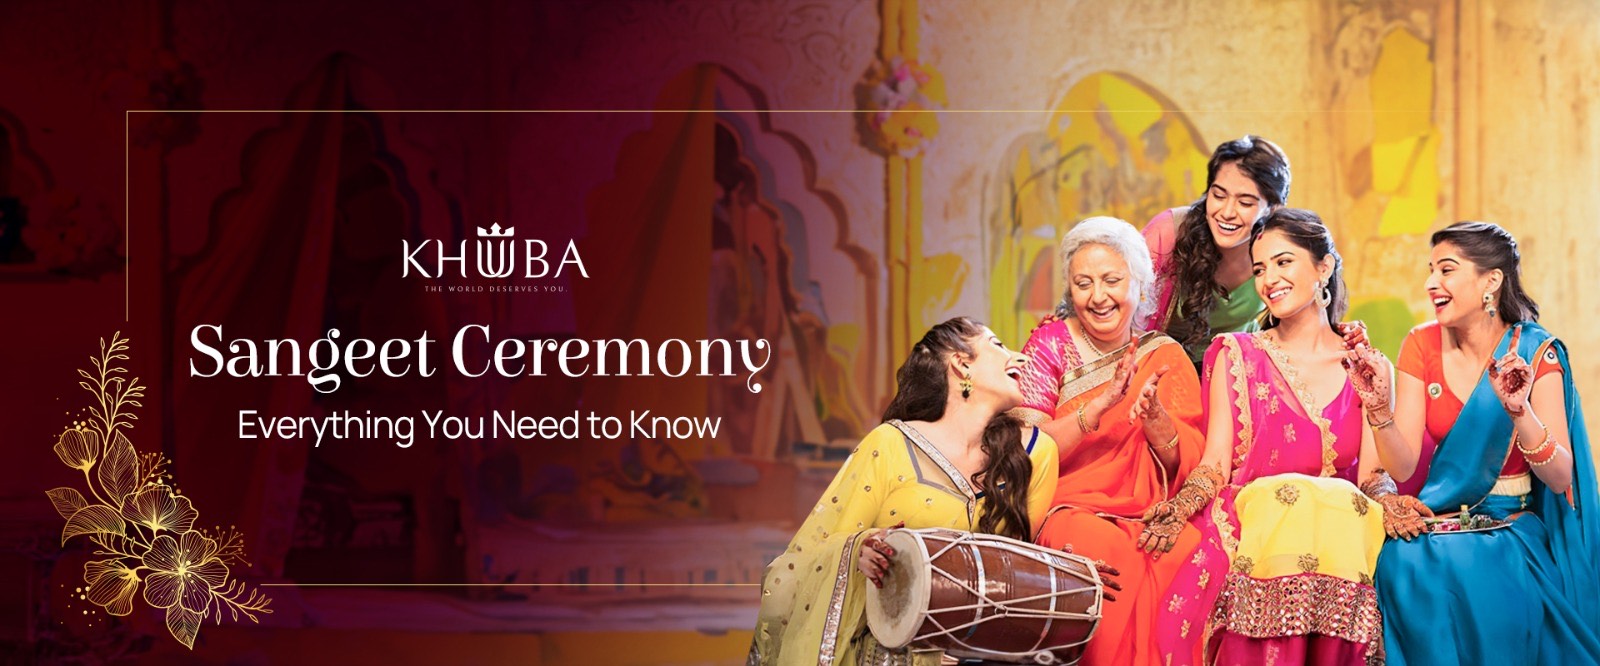 Sangeet Ceremony: Musical Extravaganza to the Wedding Bells